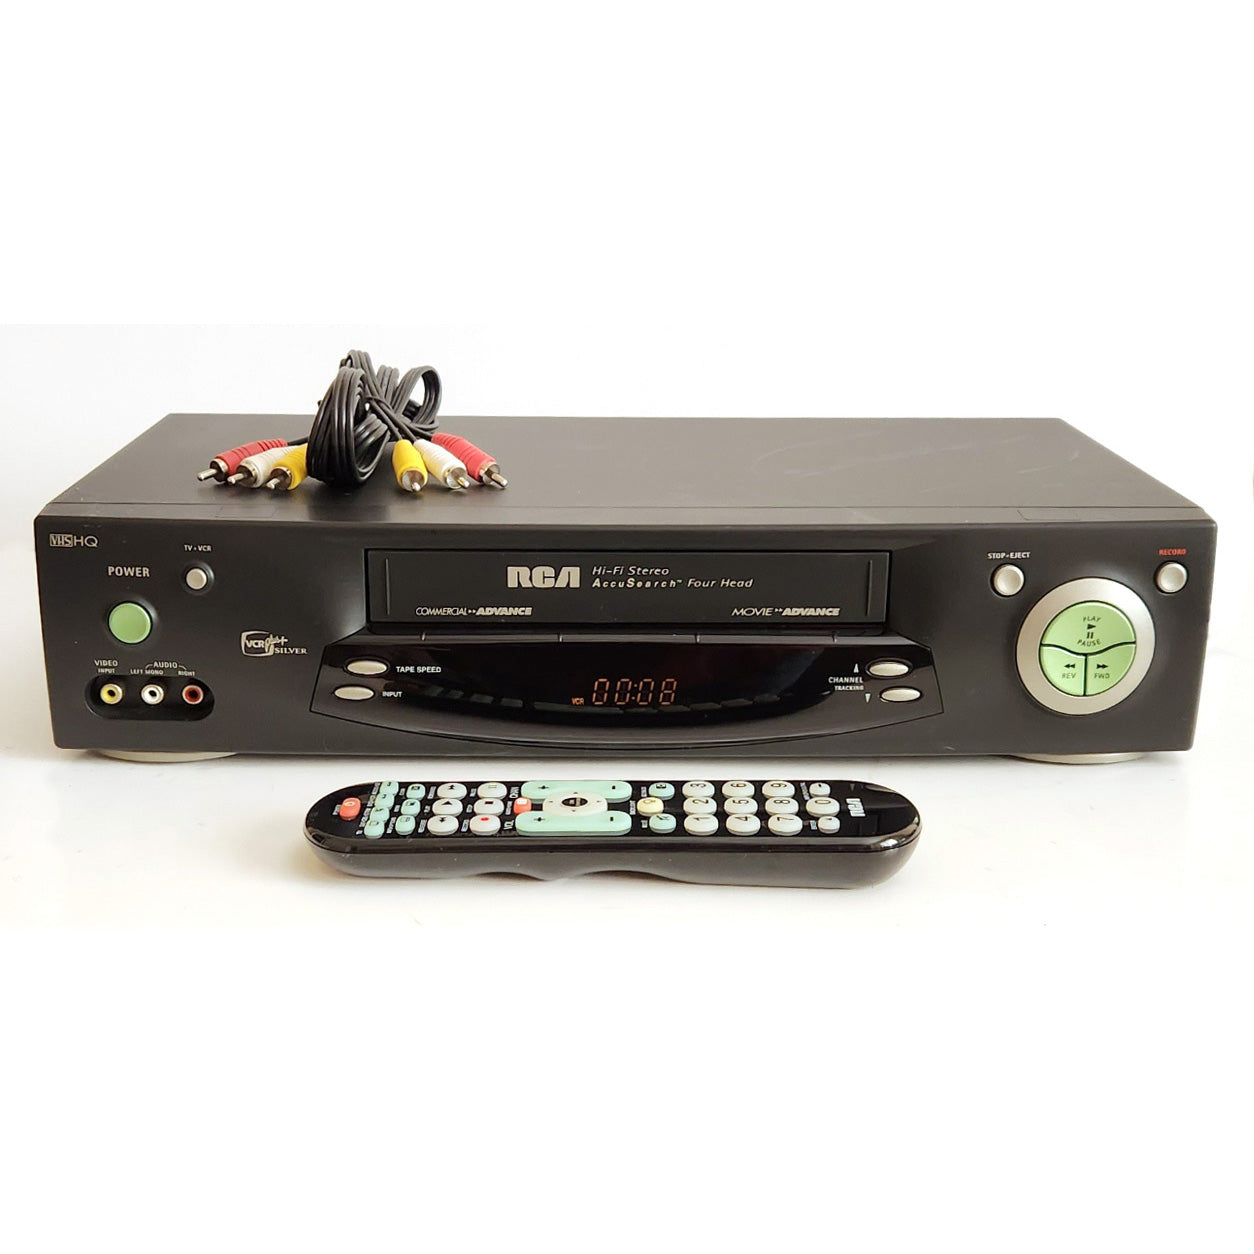 RCA VR701HF VCR, 4-Head Hi-Fi Stereo